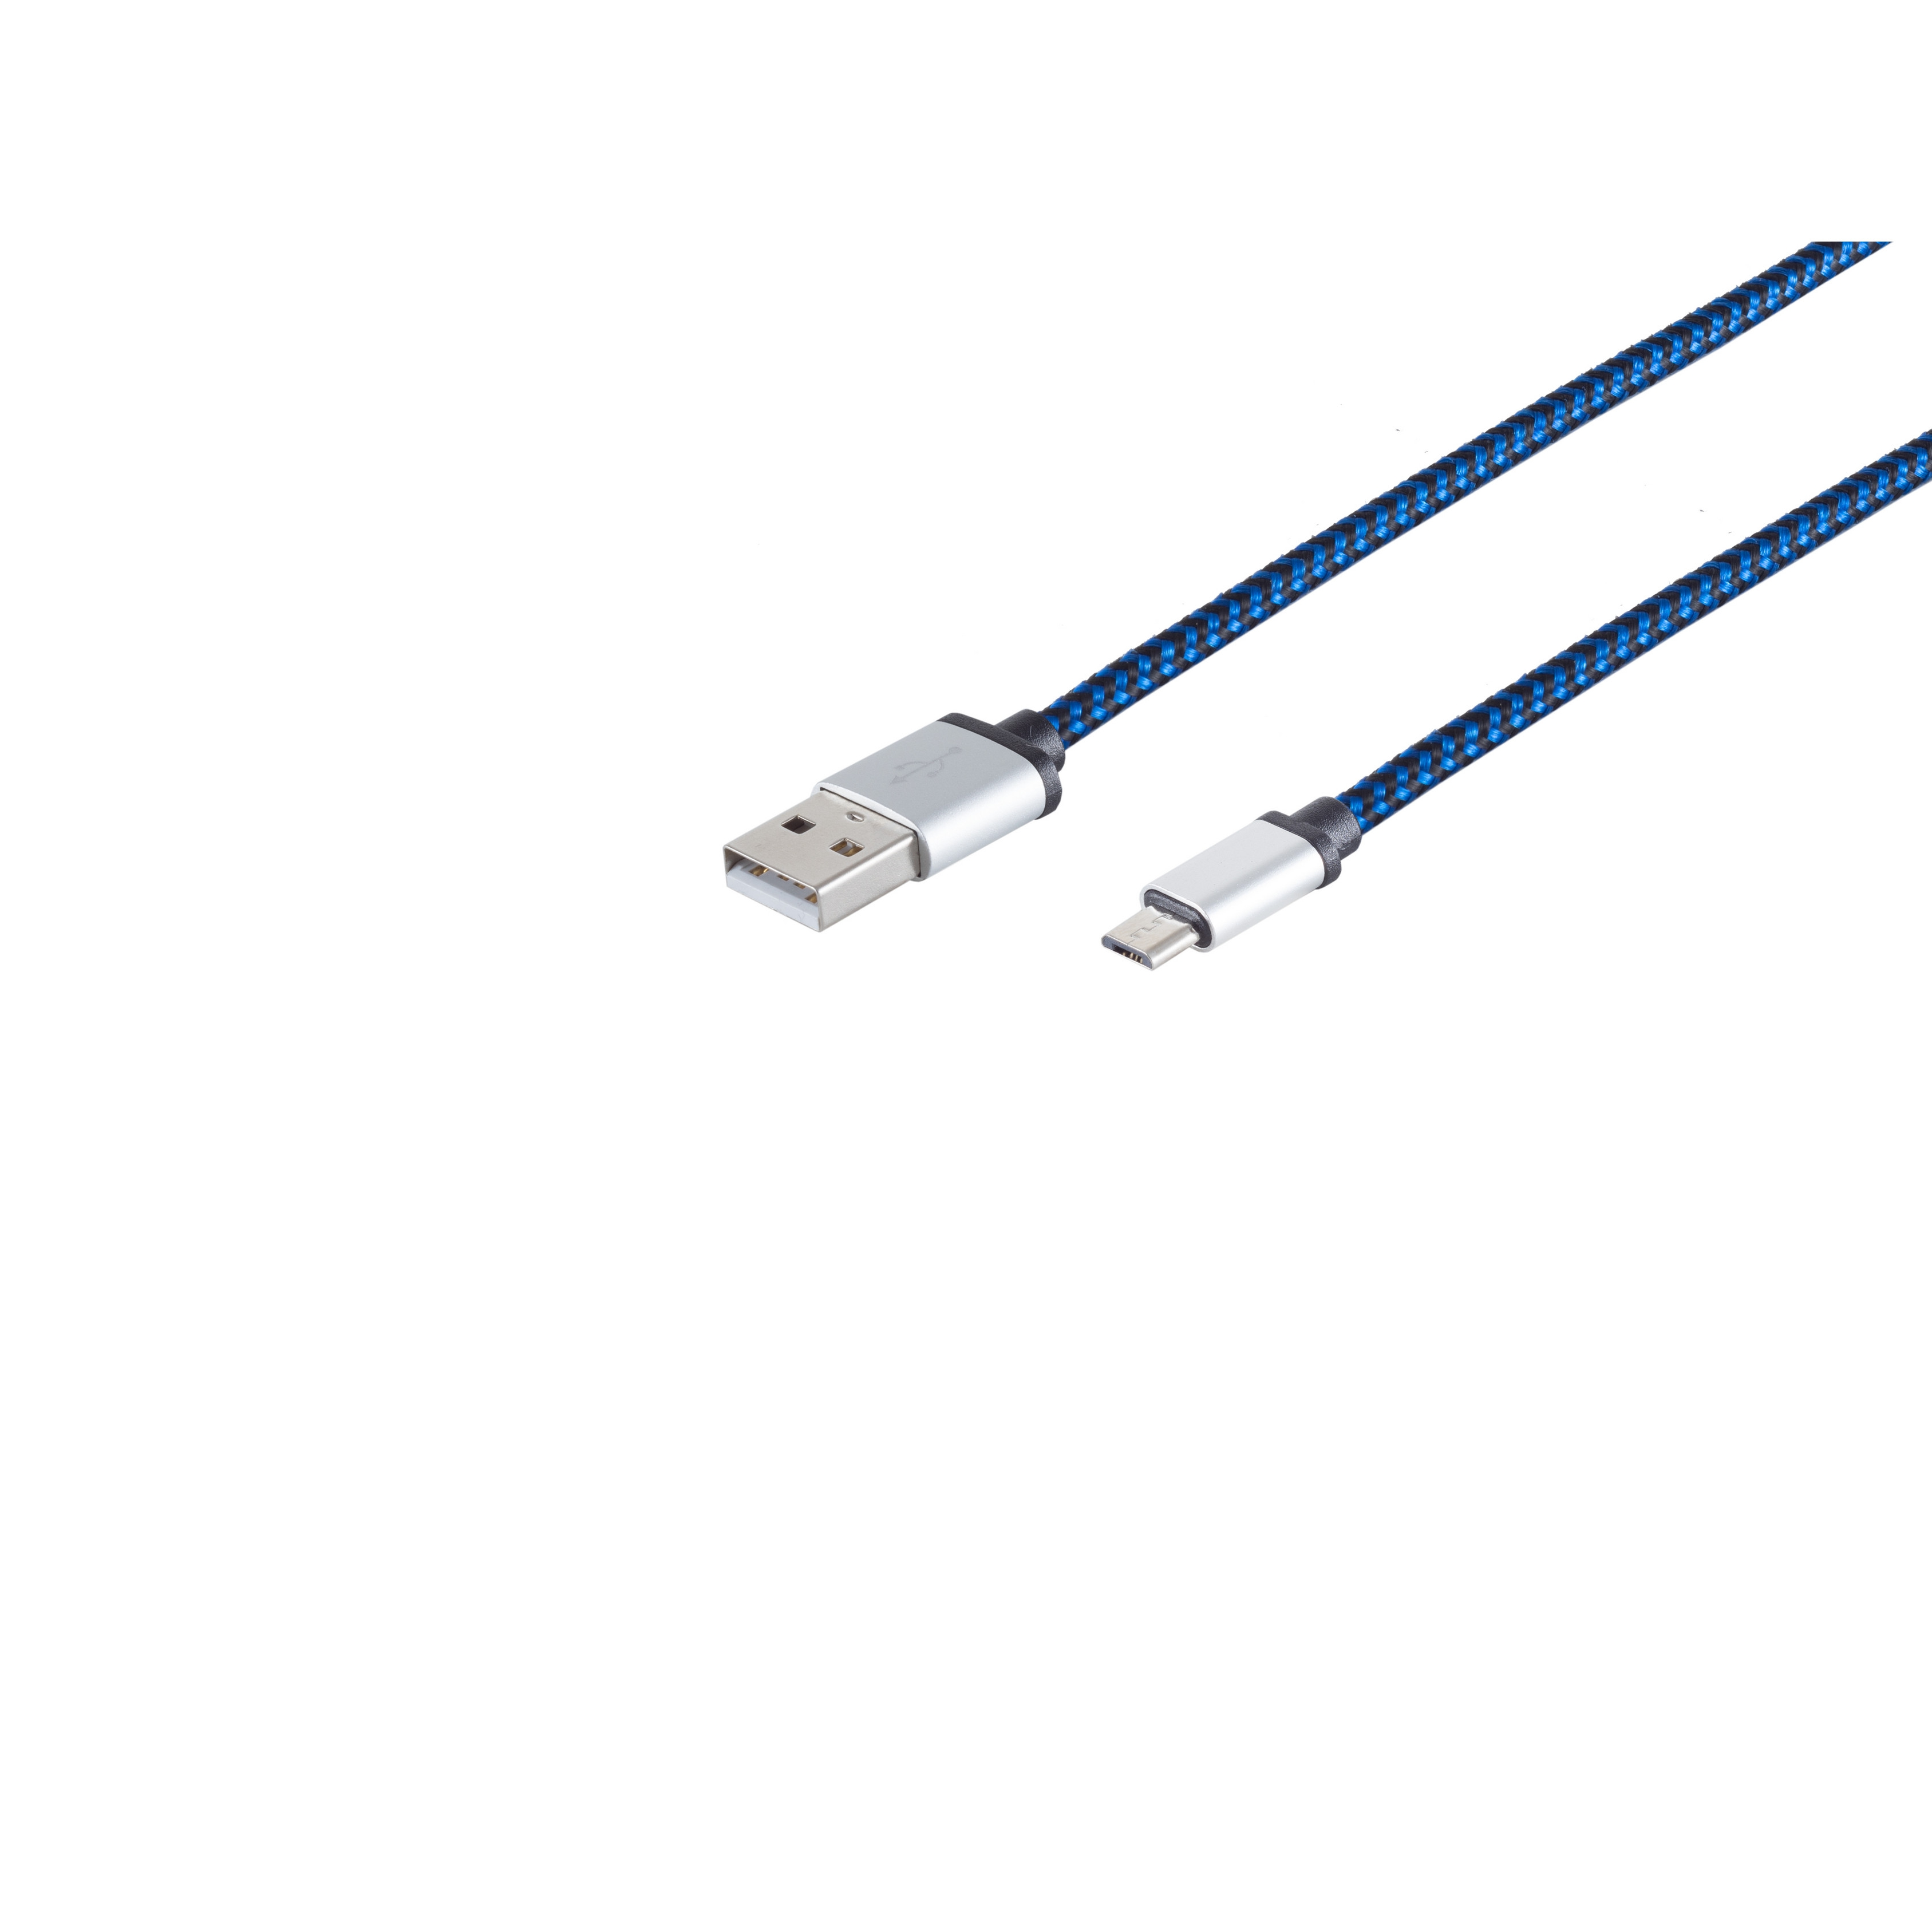 USB blau Kabel 2m Stecker S/CONN USB-Ladekabel auf B, USB Micro CONNECTIVITY MAXIMUM A